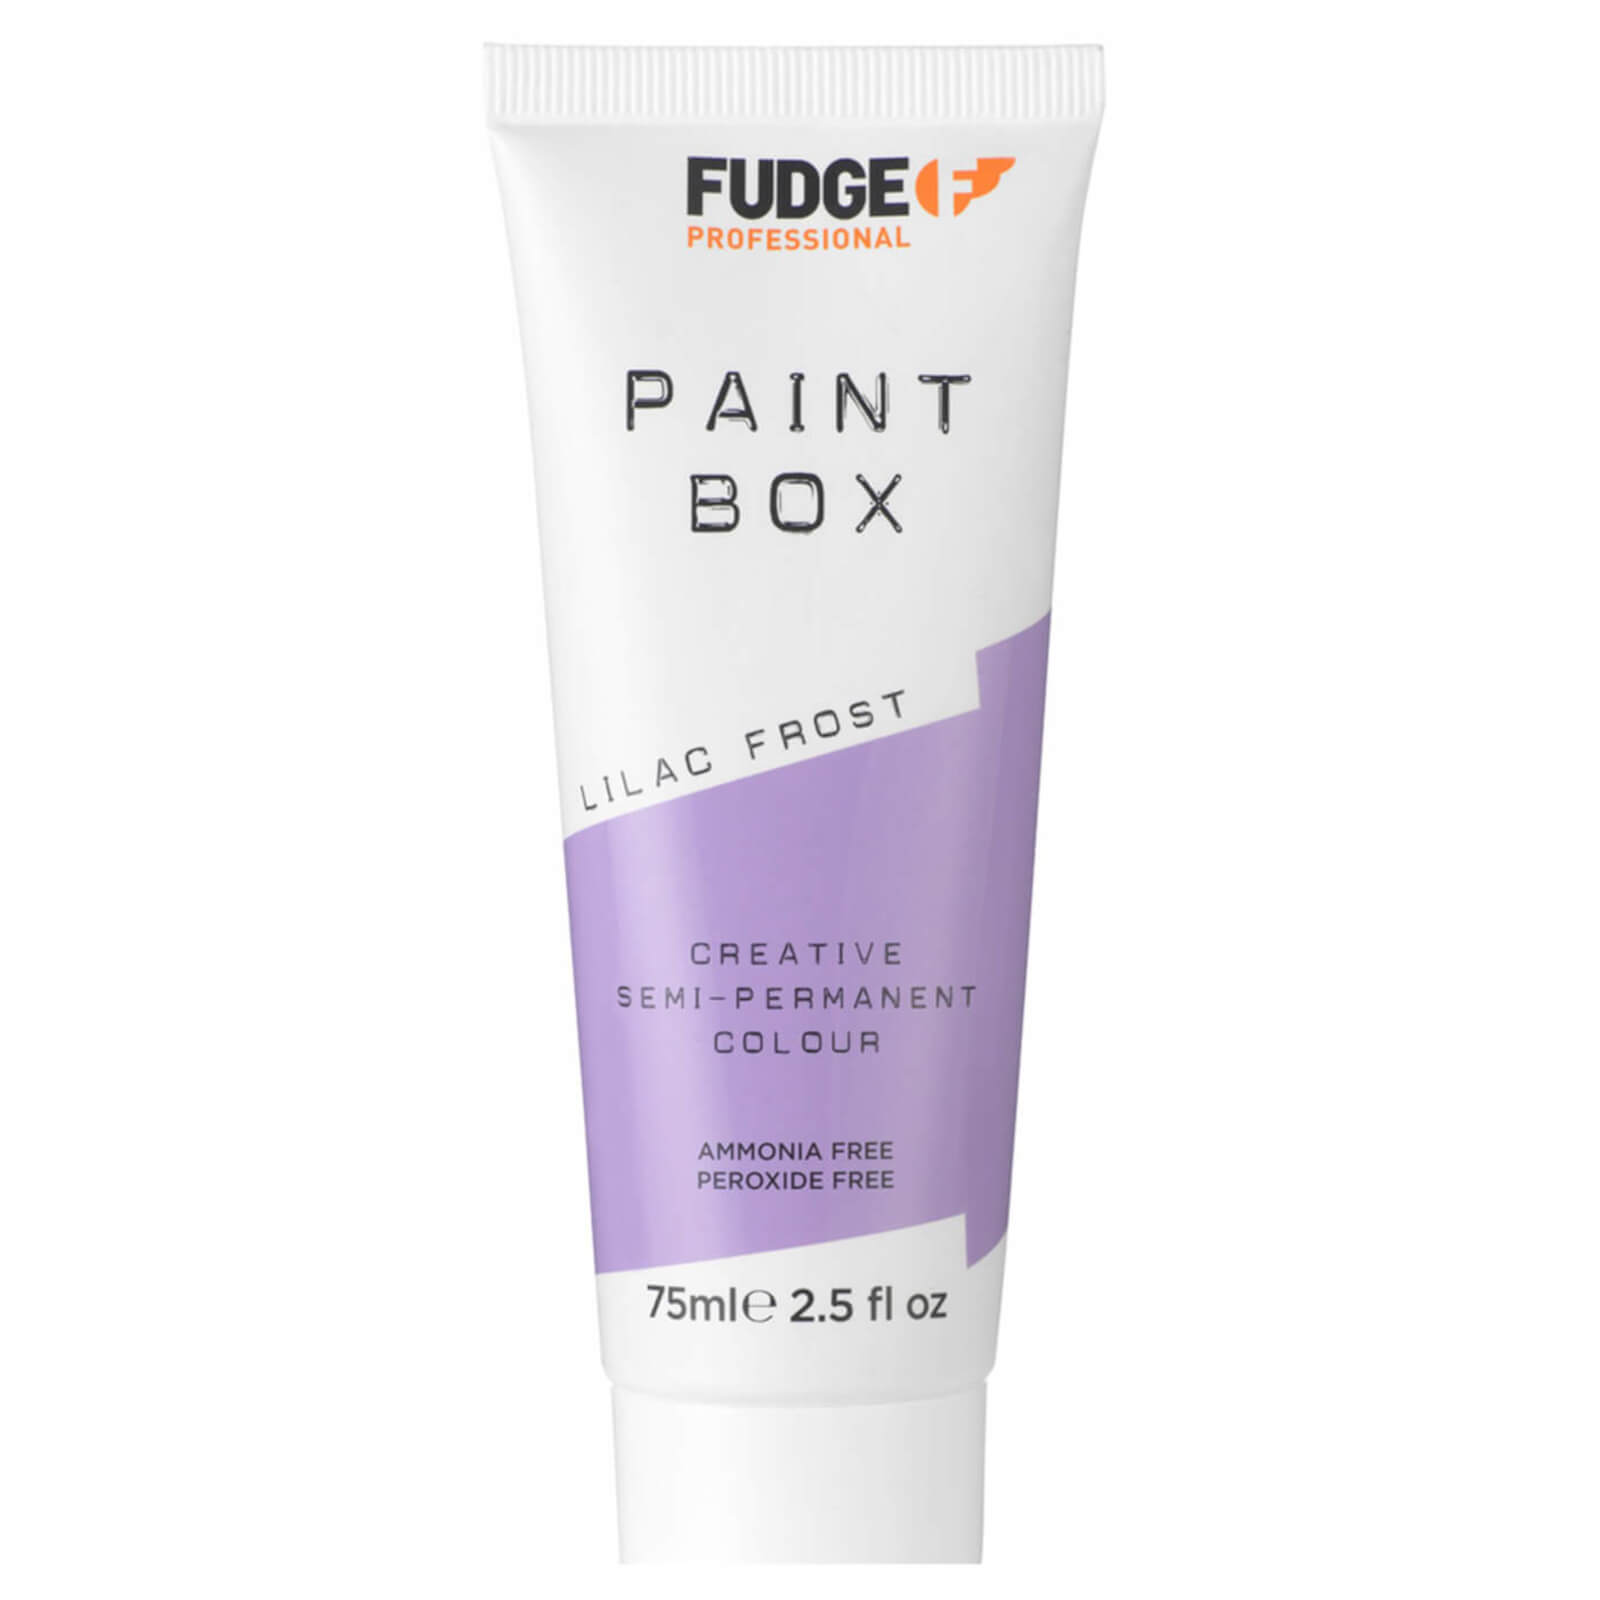 Photos - Hair Product Fudge Paintbox Hair Colourant 75ml - Lilac Frost 100013022